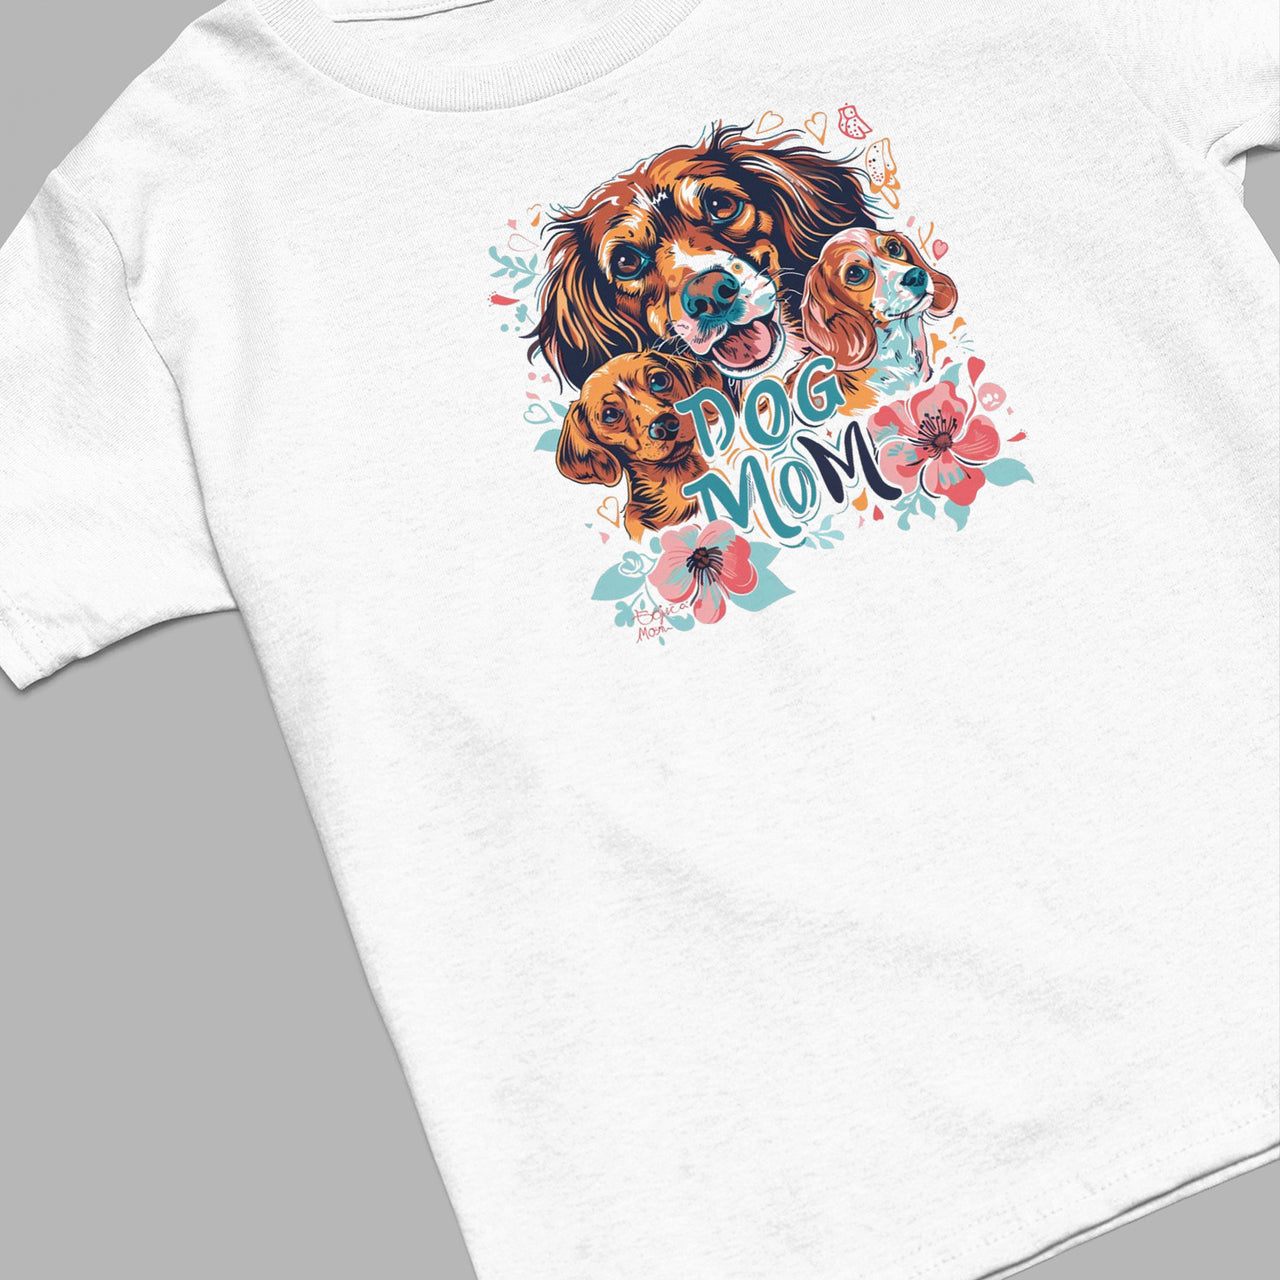 Dog Lover Shirt, Dog Mom T-Shirt, Dog Owner Shirt, Gift For Dog Mom, Funny Dog Shirts, Women Dog T-Shirt, Mother's Day Gift, Dog Lover Wife Gifts, Dog Shirt 03